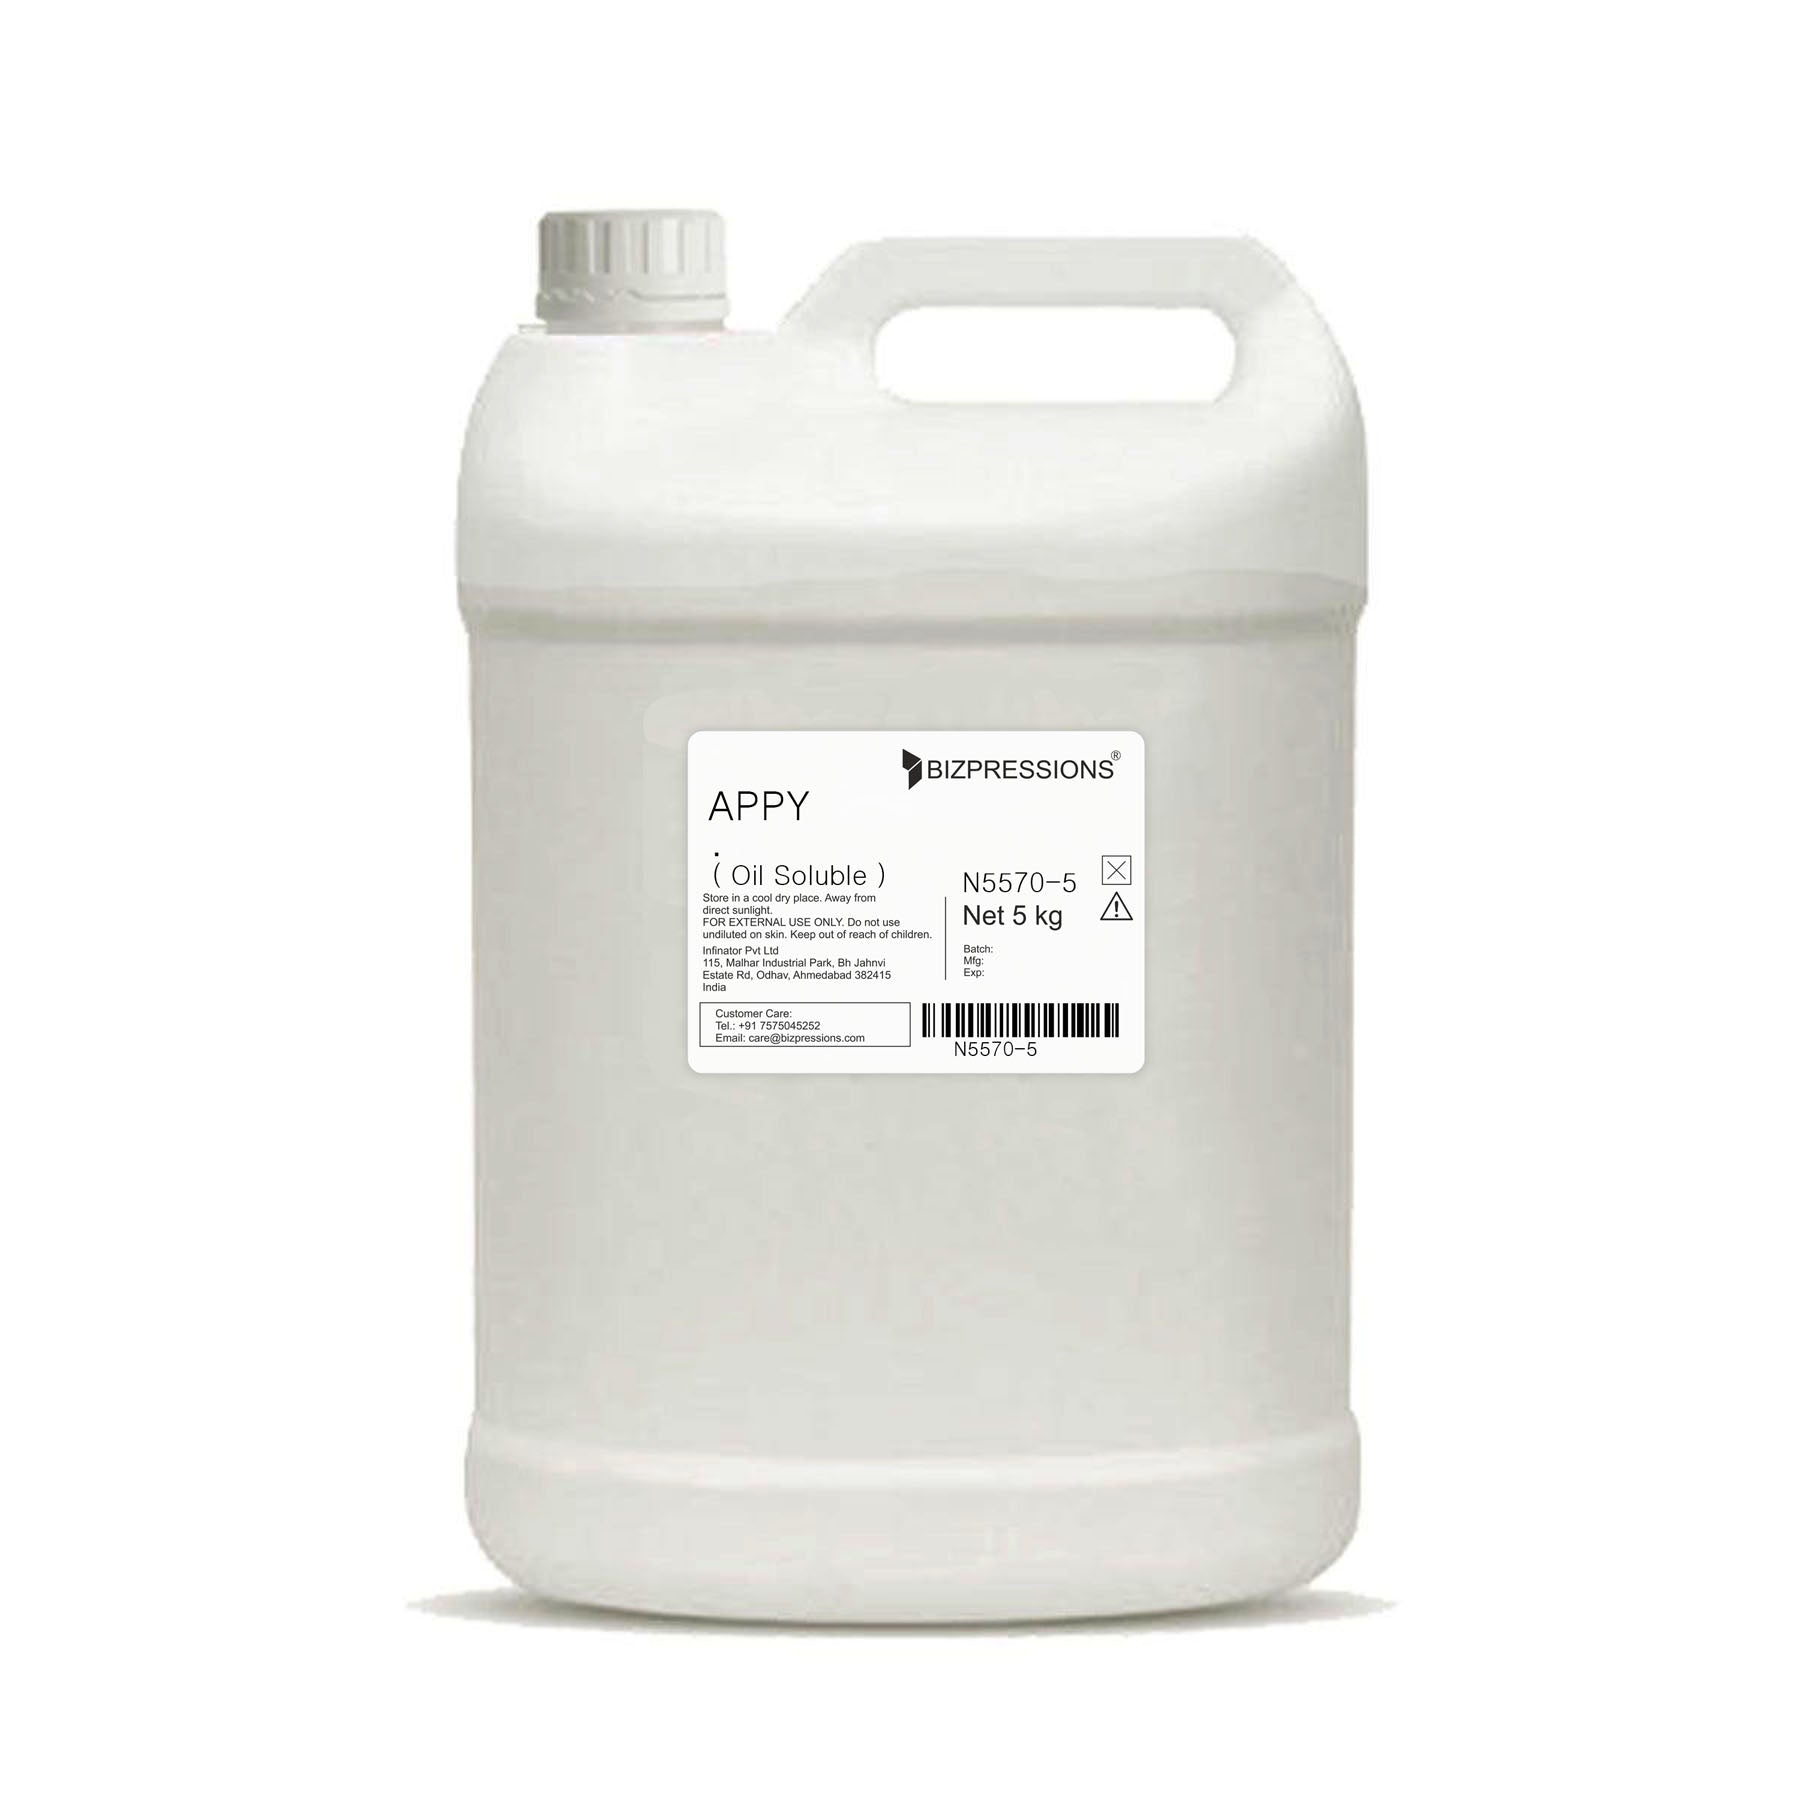 APPY - Fragrance ( Oil Soluble ) - 5 kg